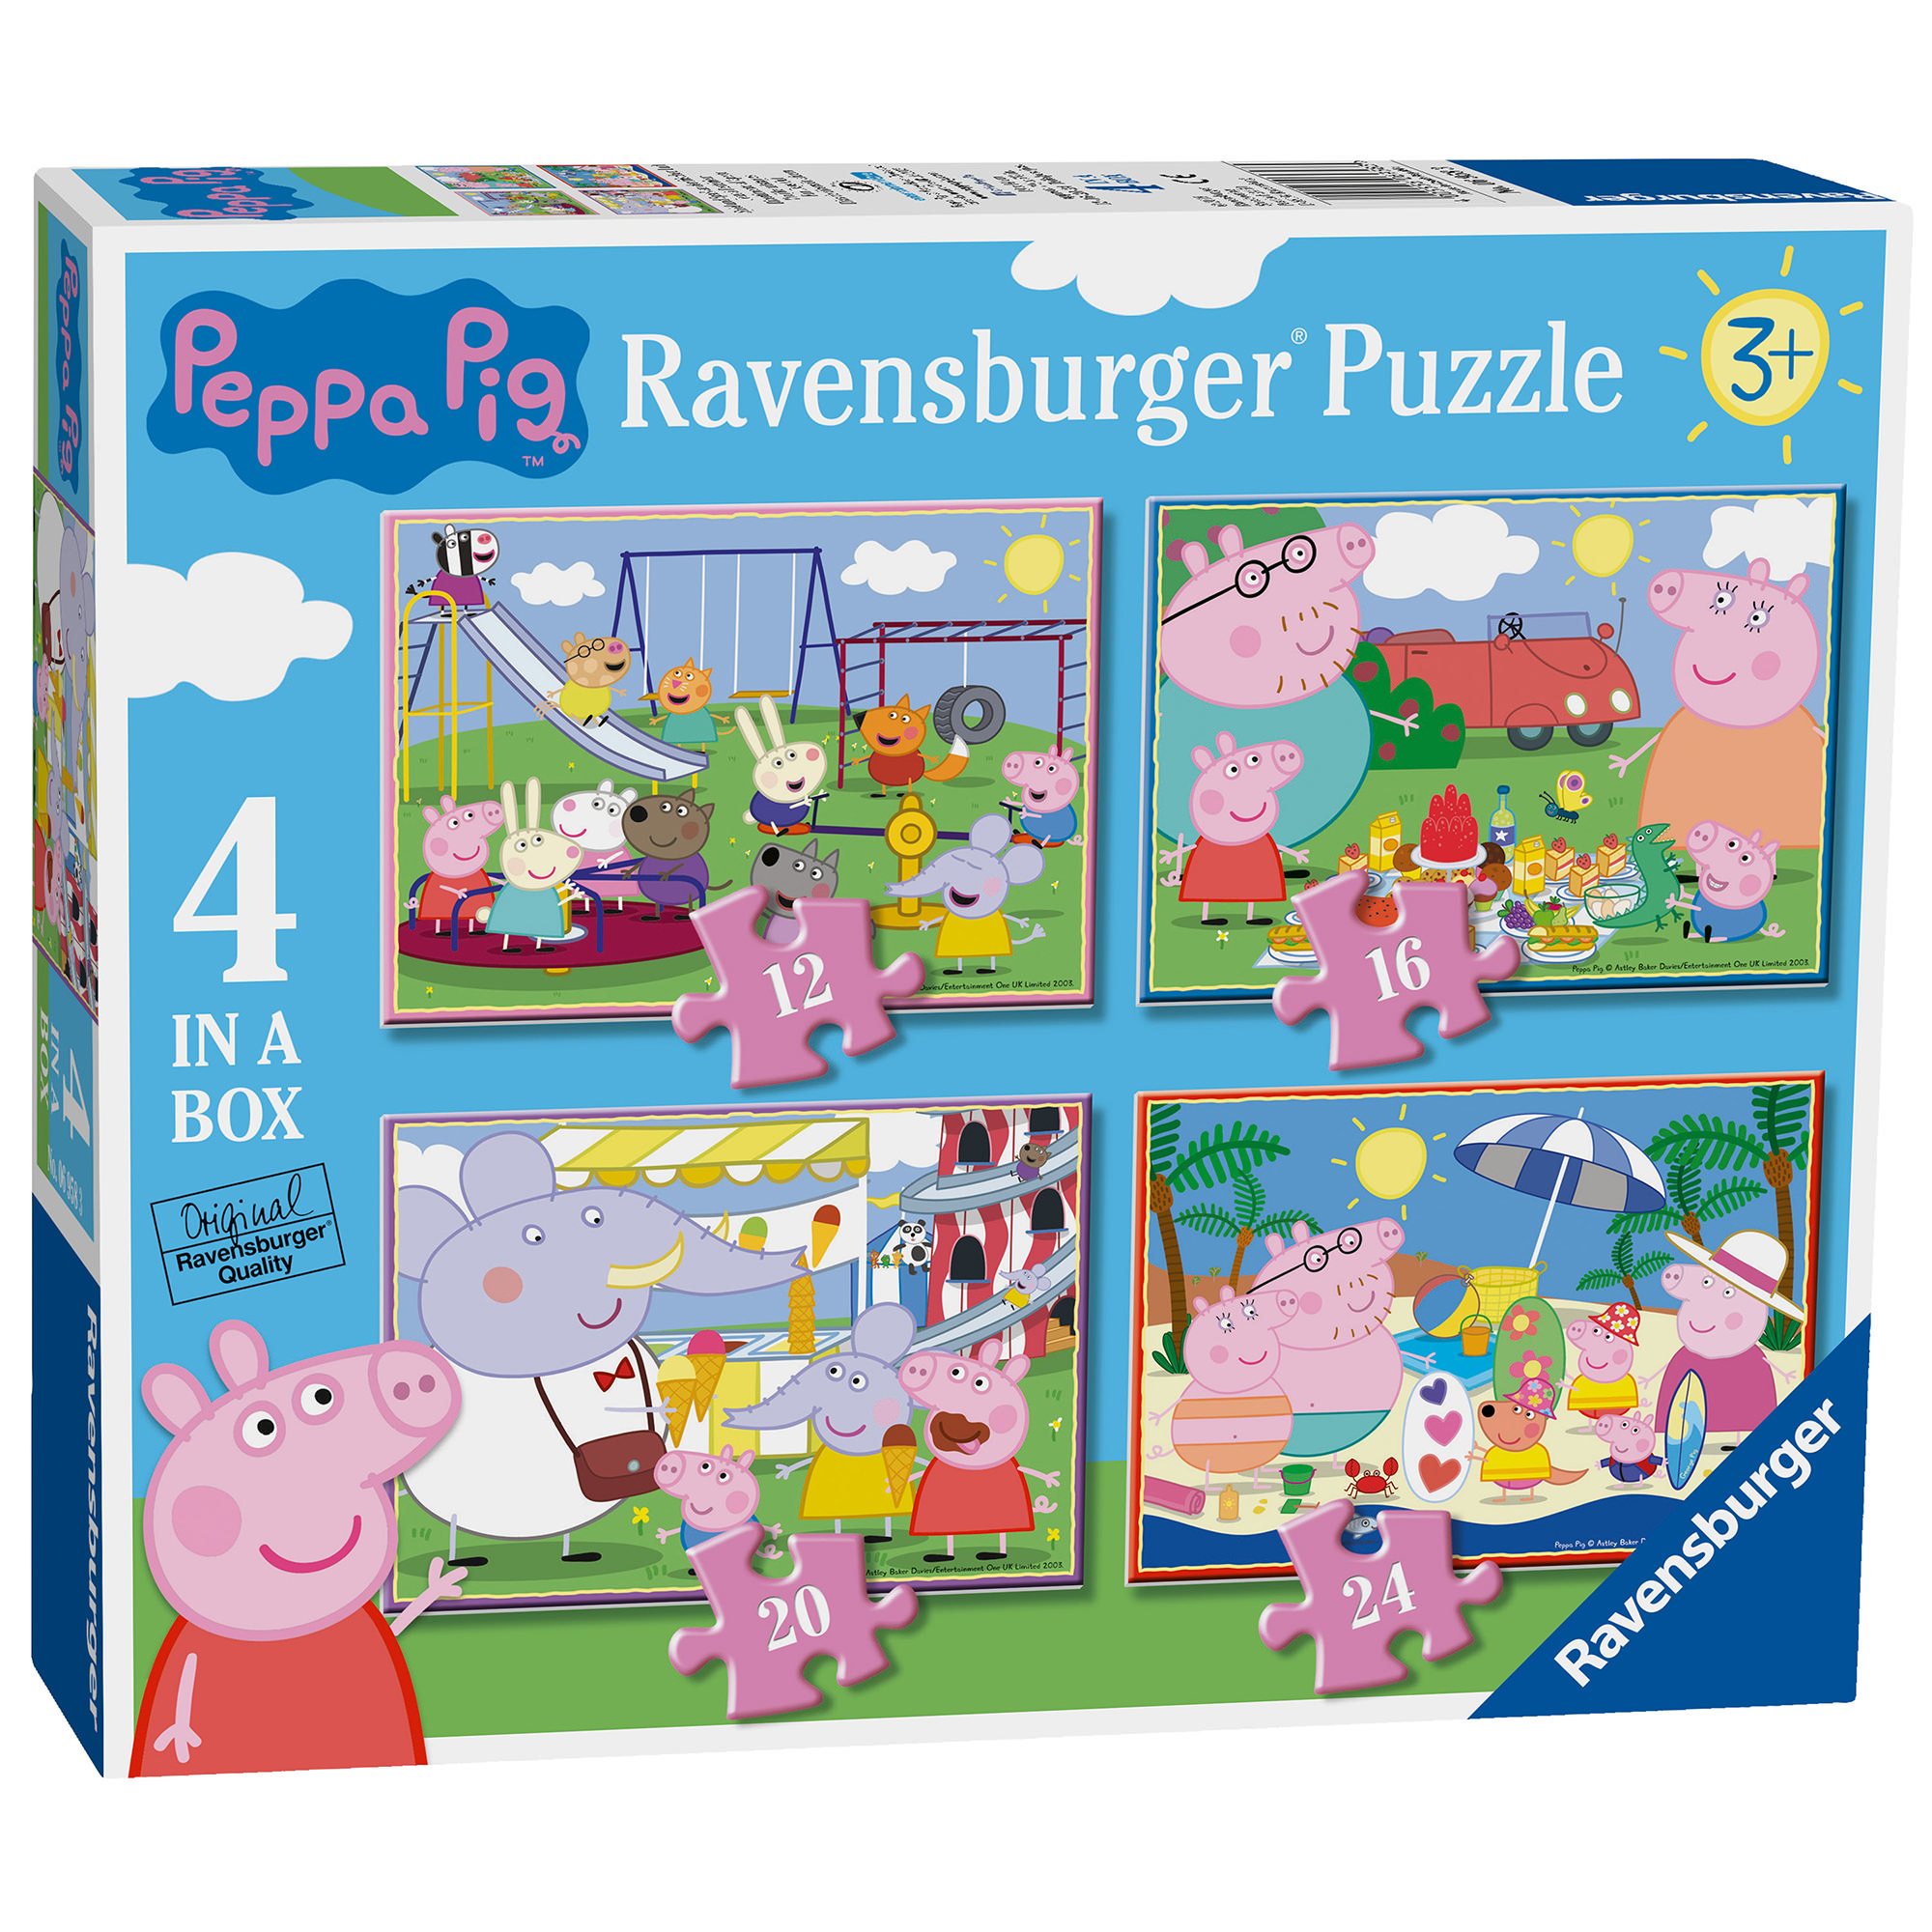 12, 16, 20, 24 PIECES Jigsaw Puzzles pour... environ 10.16 cm Ravensburger Peppa Pig Boîte 4 in 